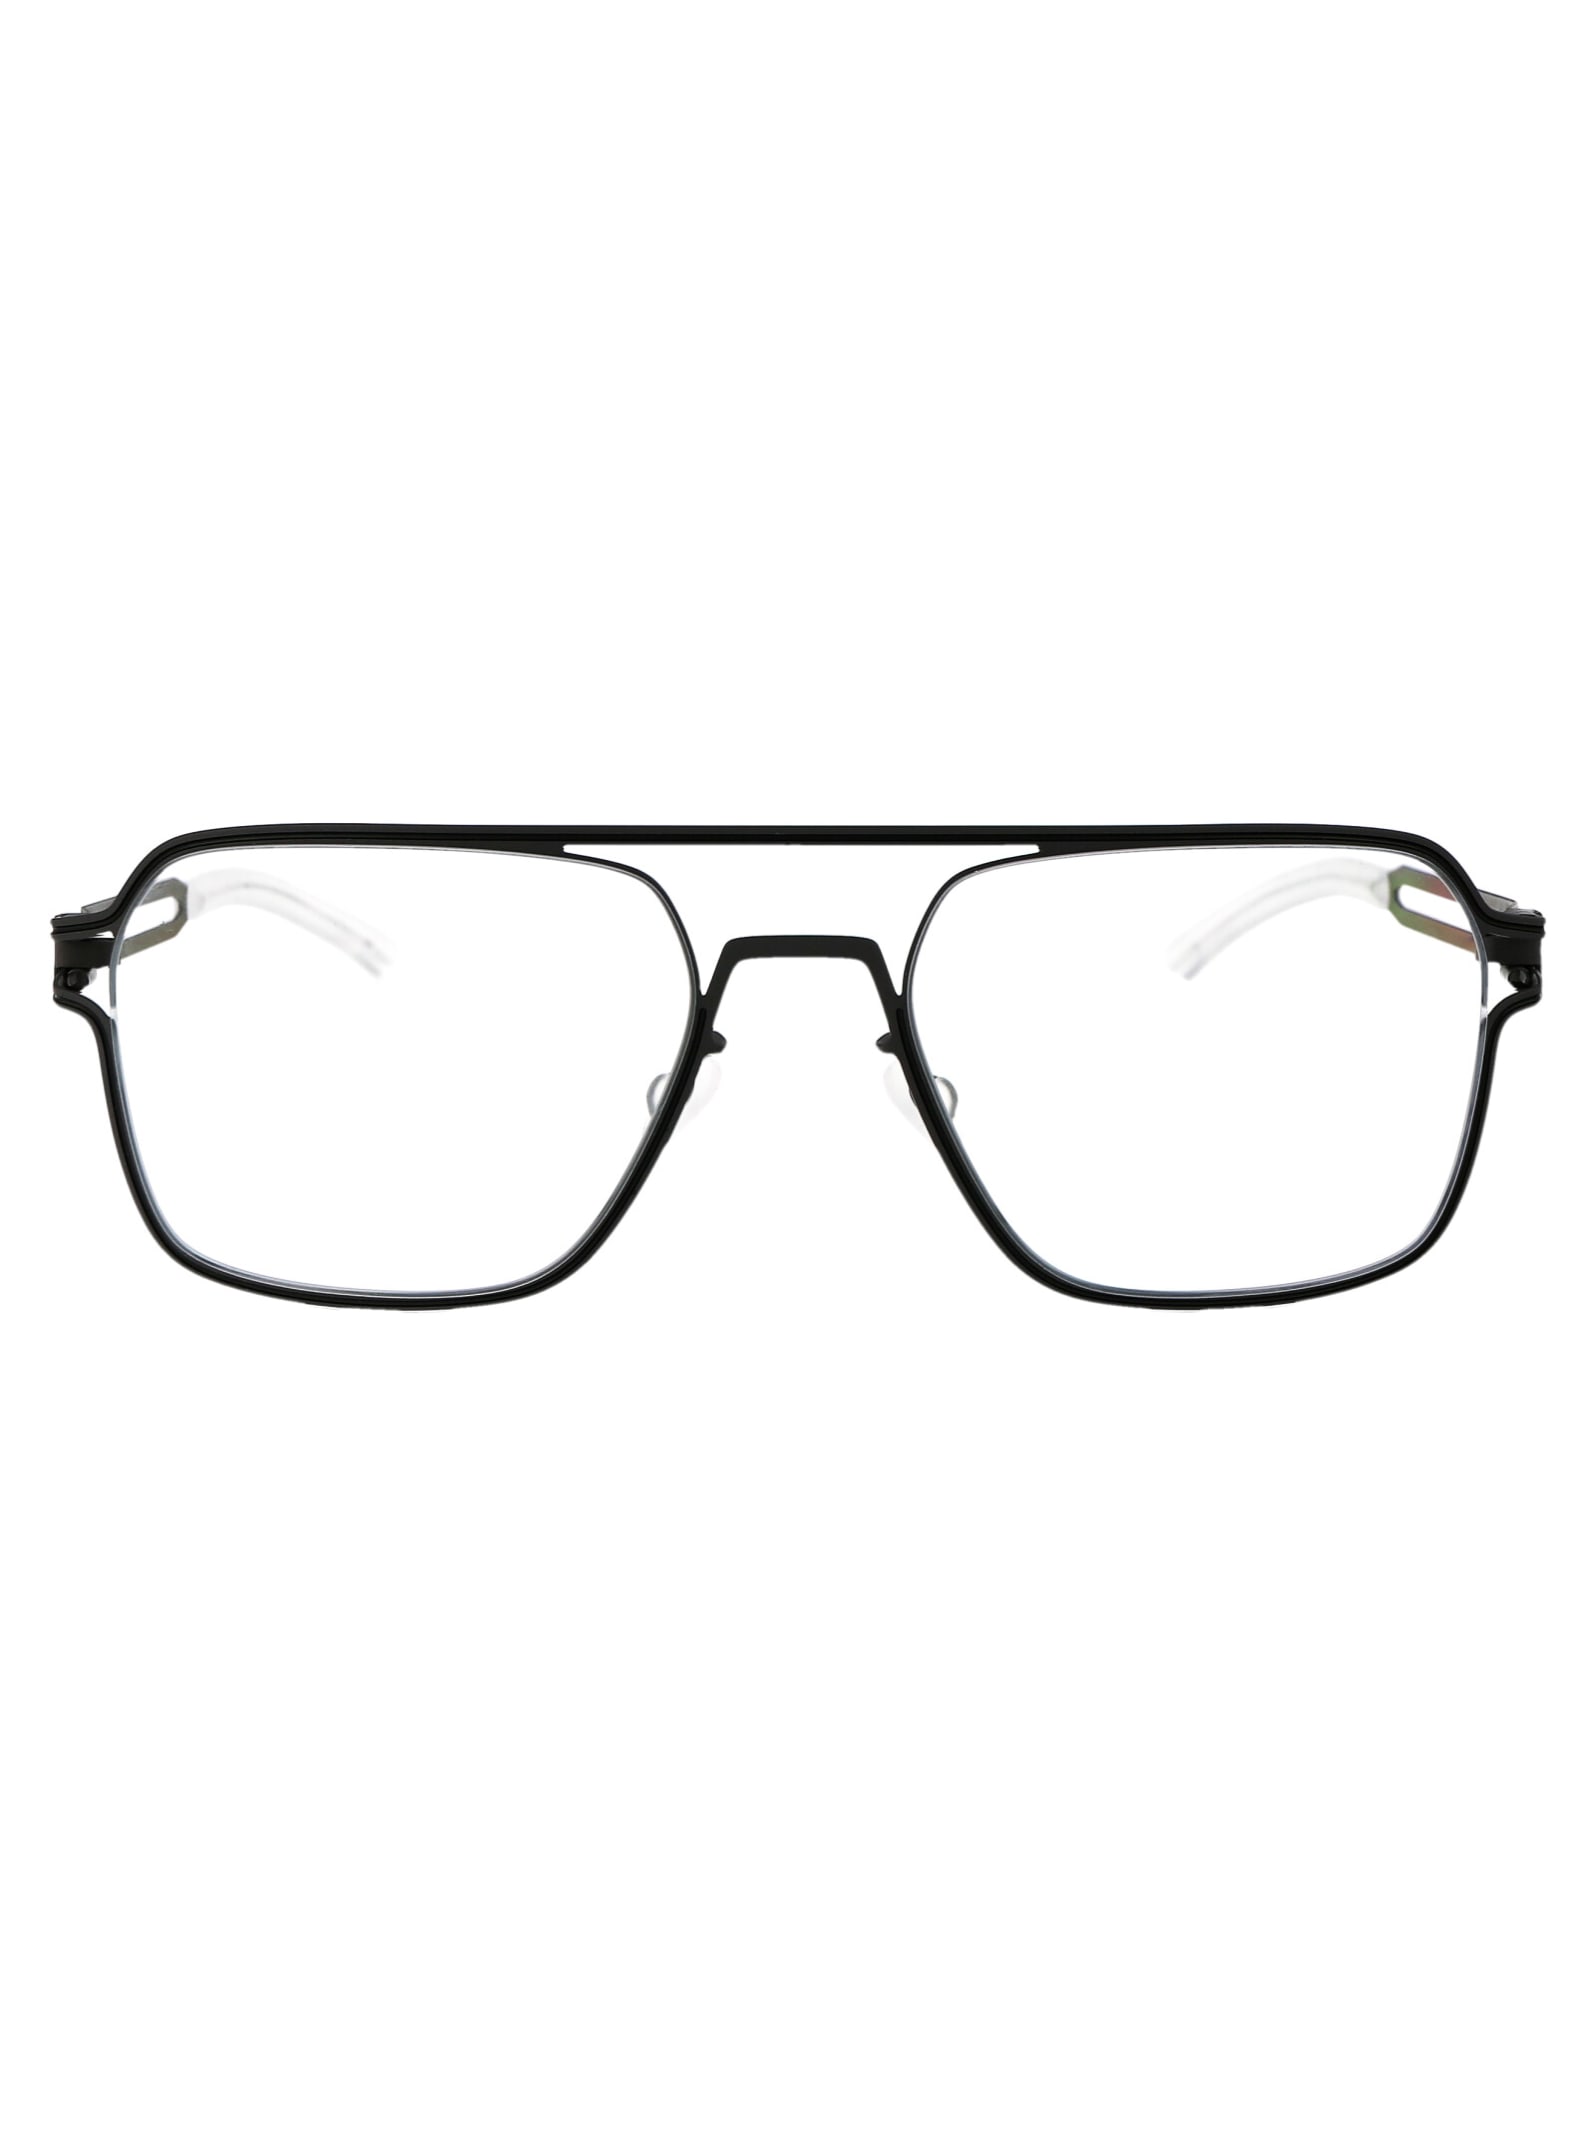 Jalo Glasses